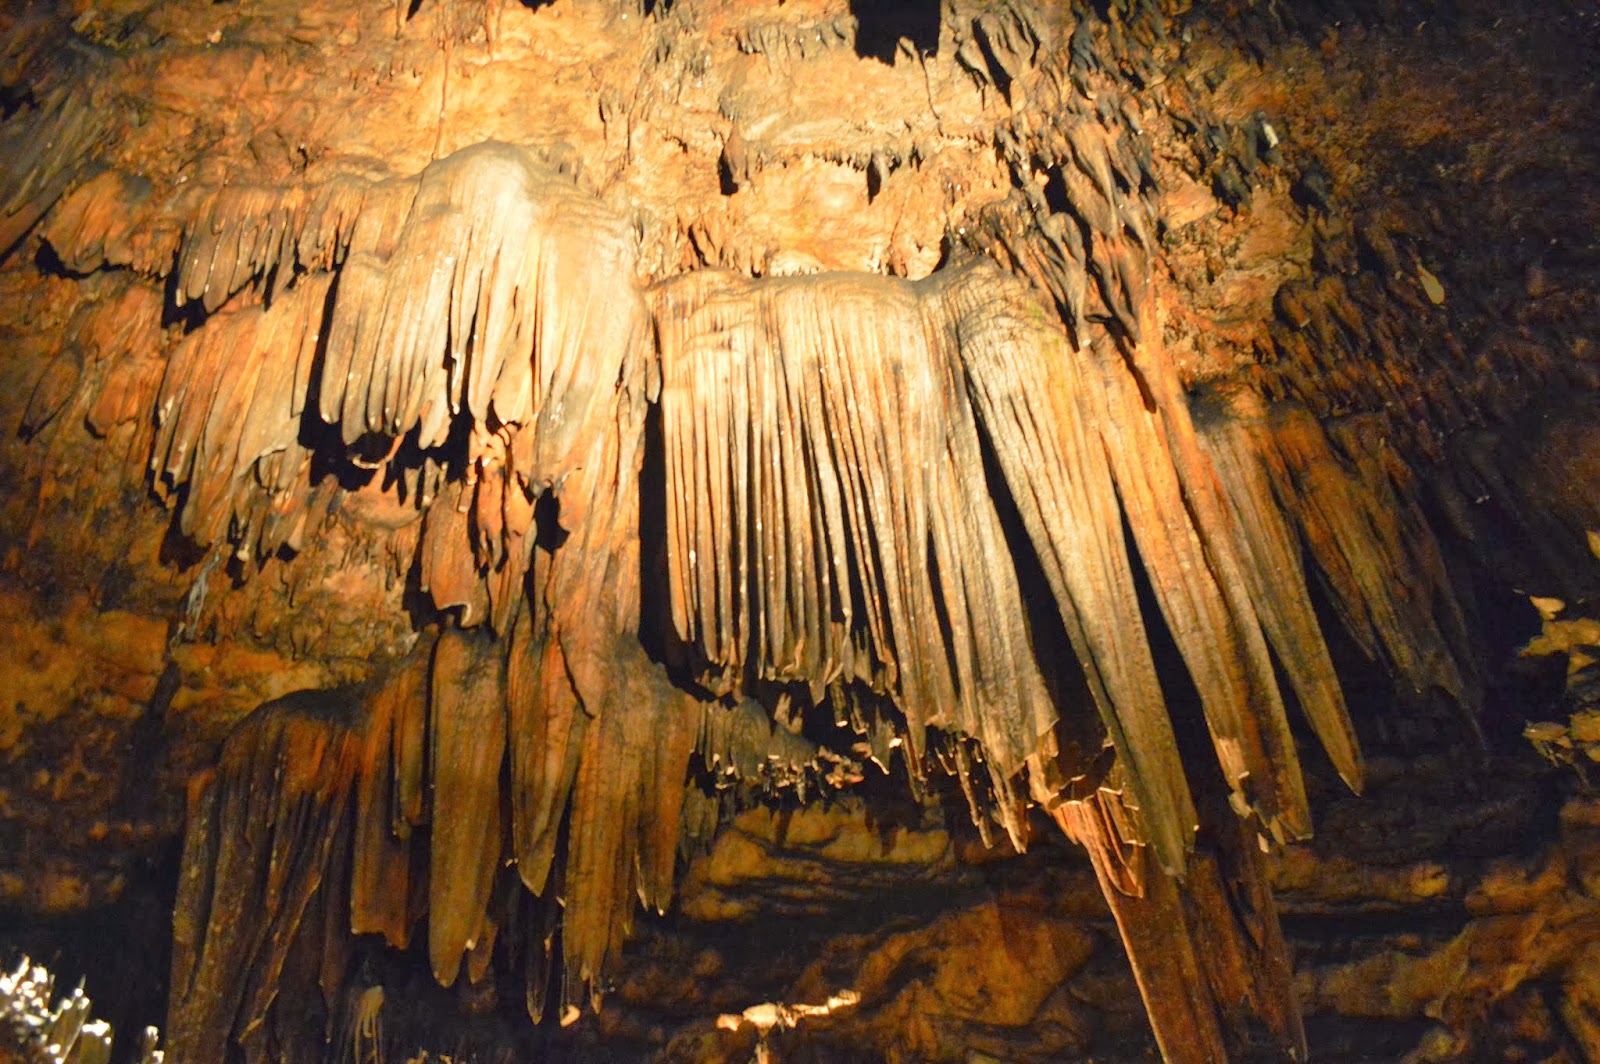 DeSoto Caverns